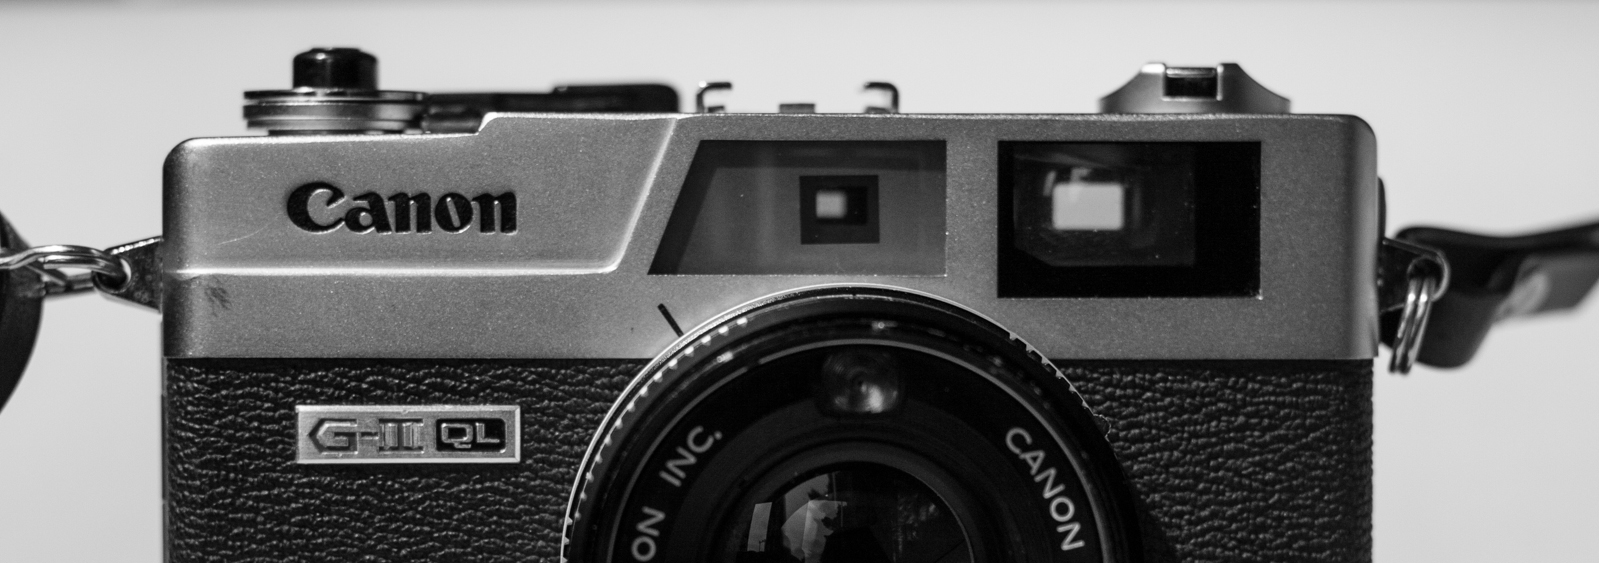 Canon Canonet QL19 G-iii – My new rangefinder. | larsnl photography